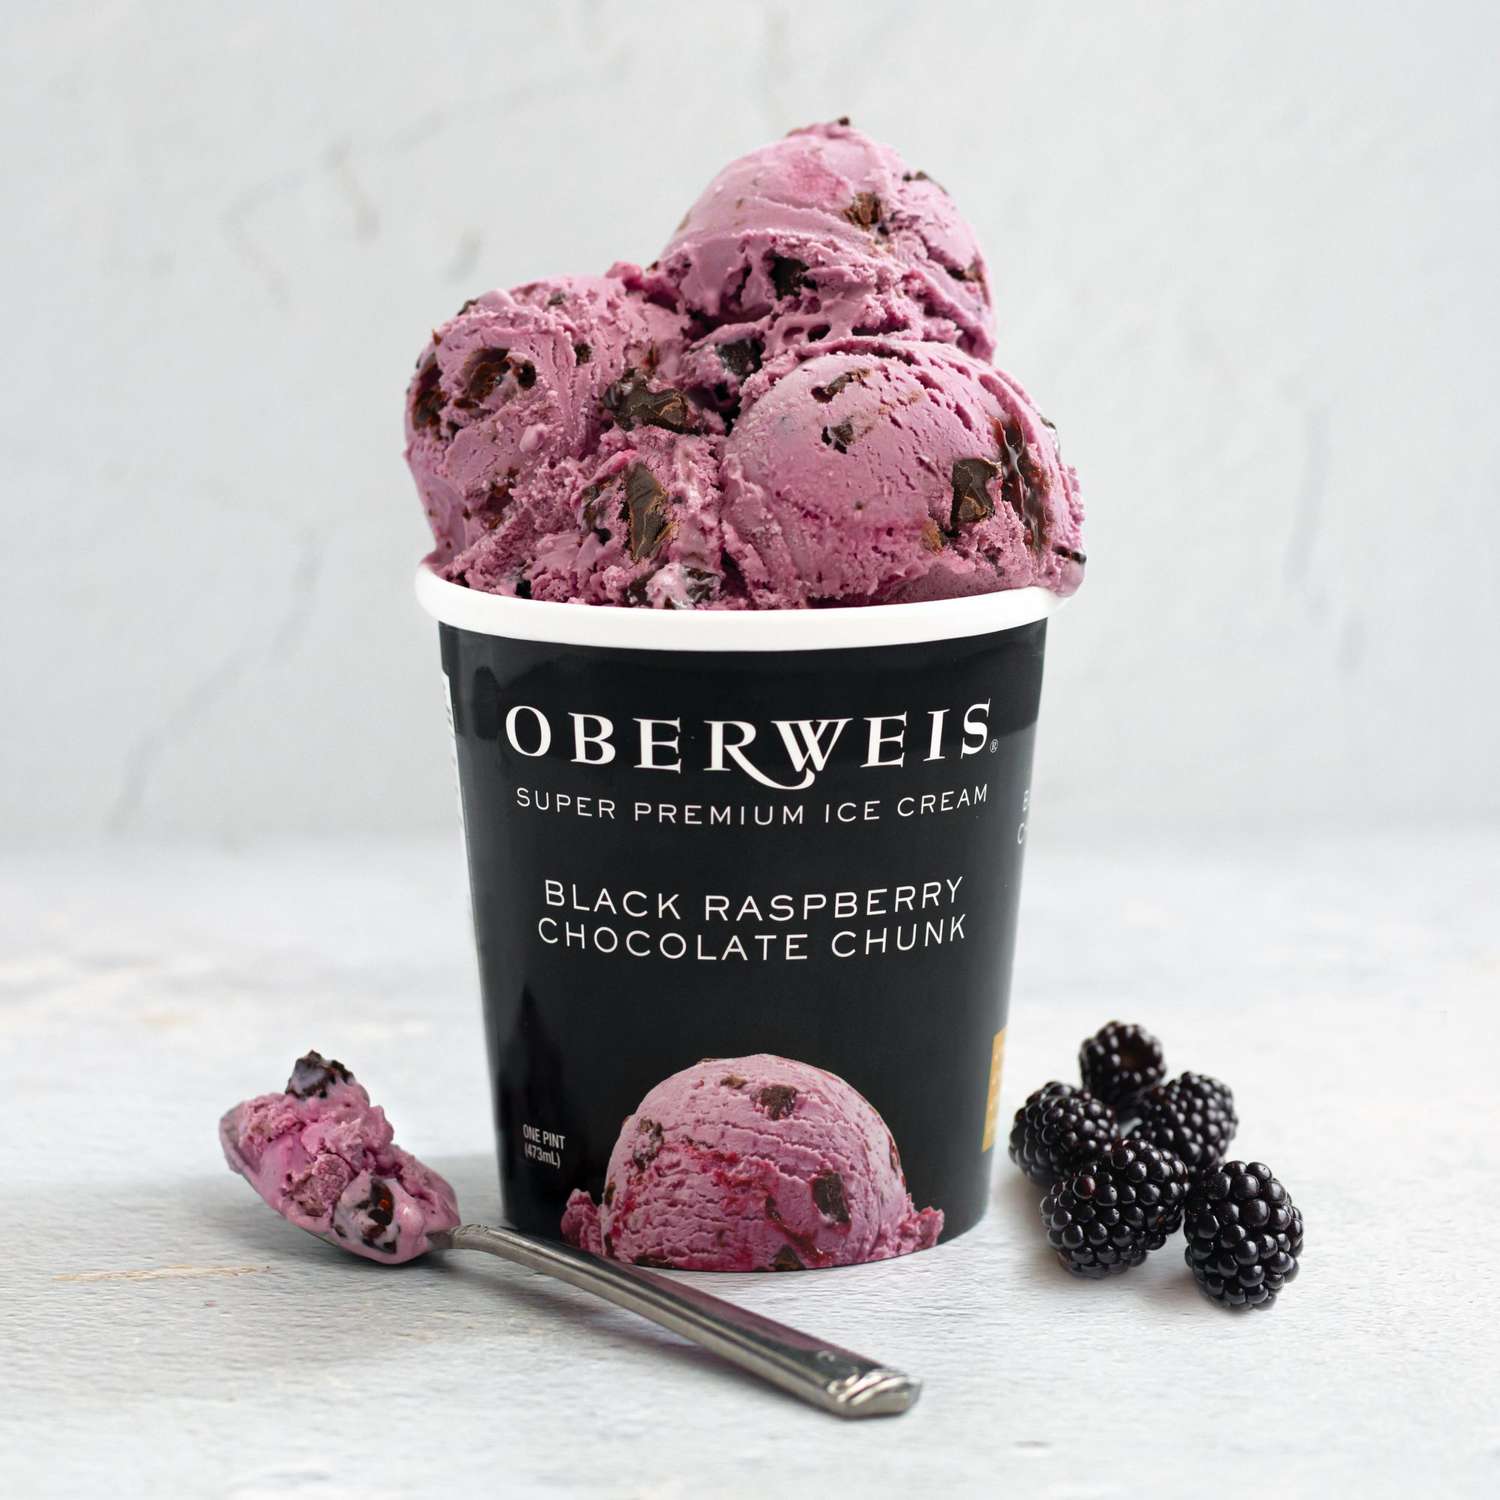 Oberweis pint of black raspberry chocolate chunk ice cream